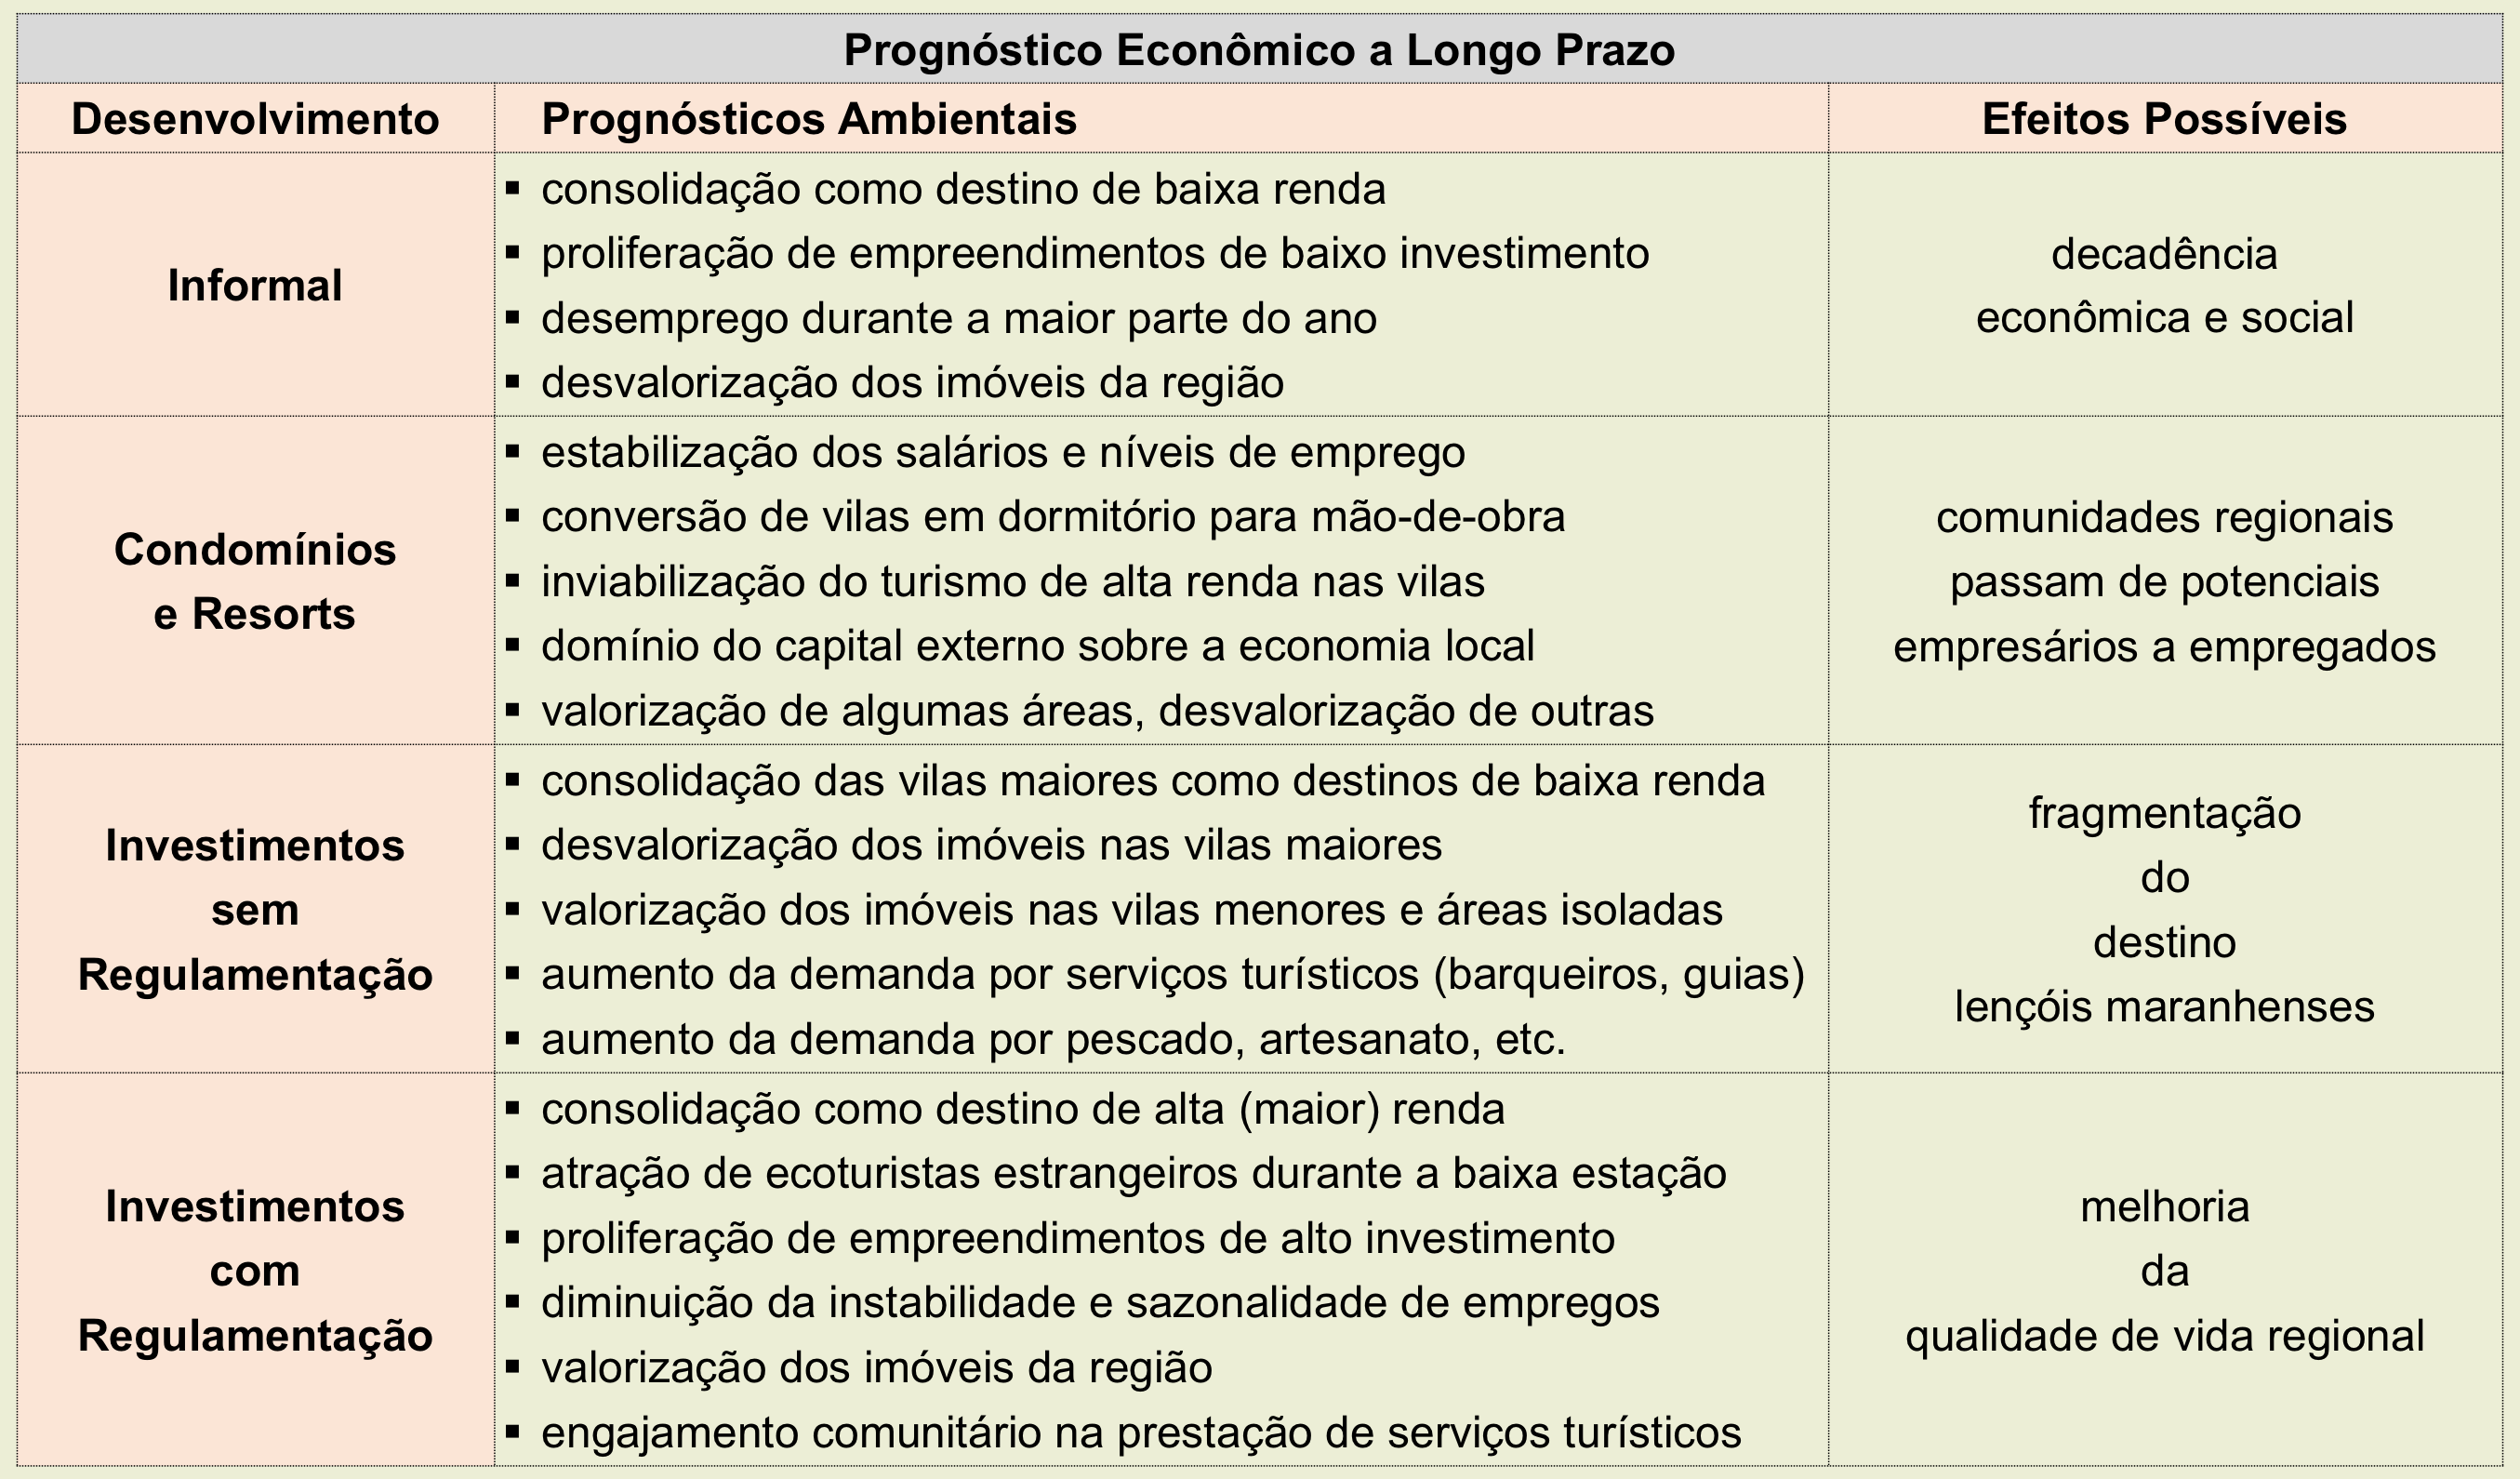 maranhao analise prognostico economico longo prazo